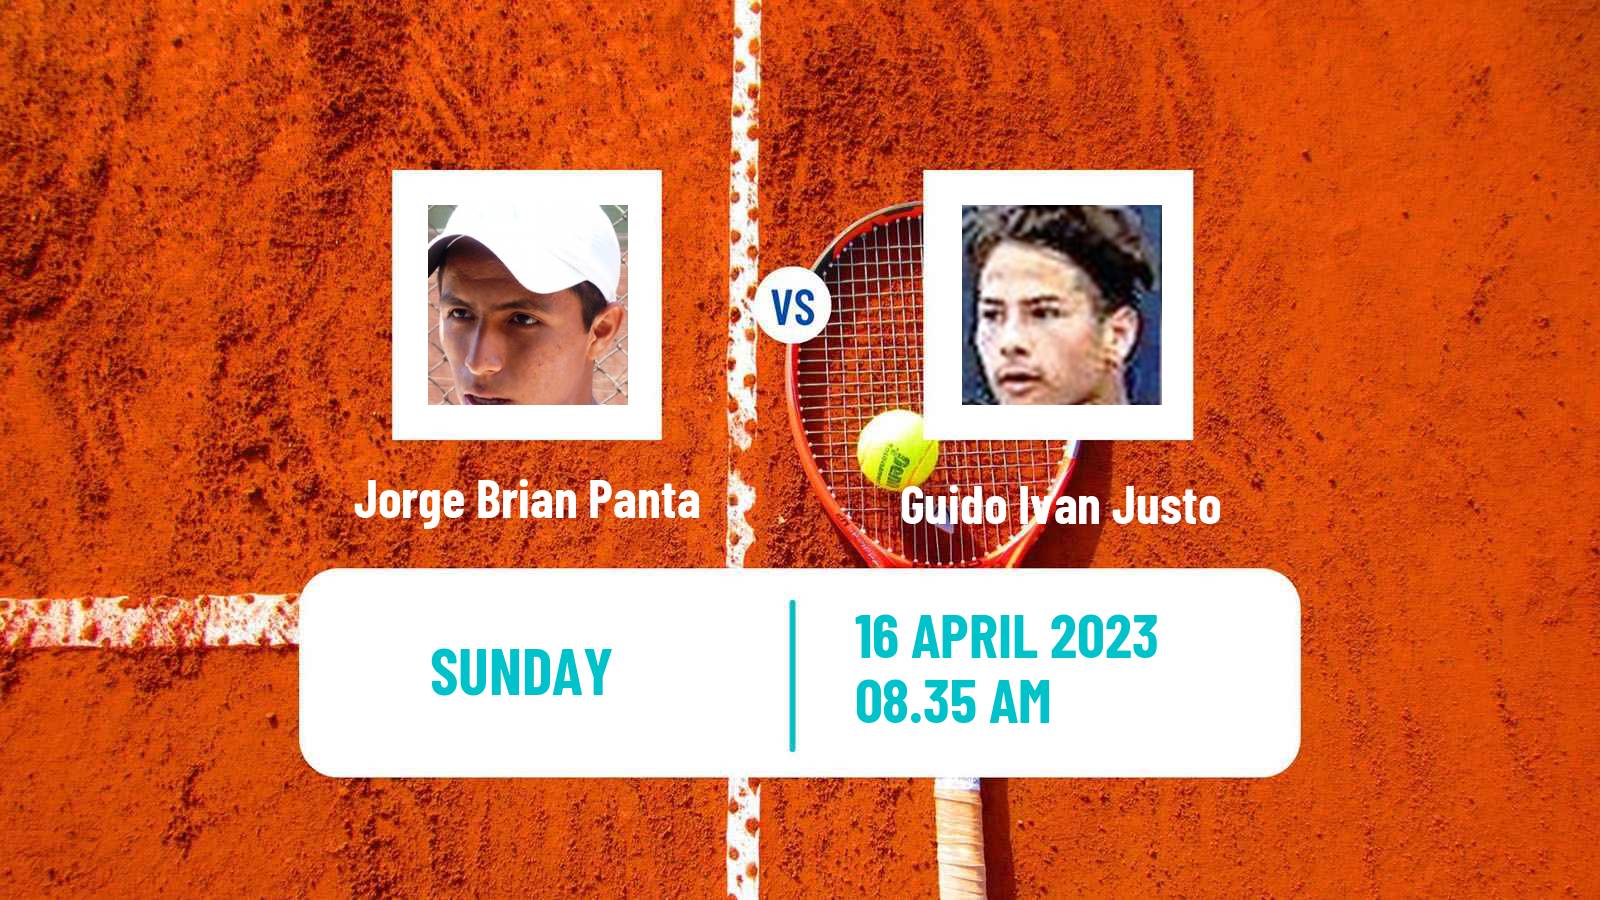 Tennis ATP Challenger Jorge Brian Panta - Guido Ivan Justo